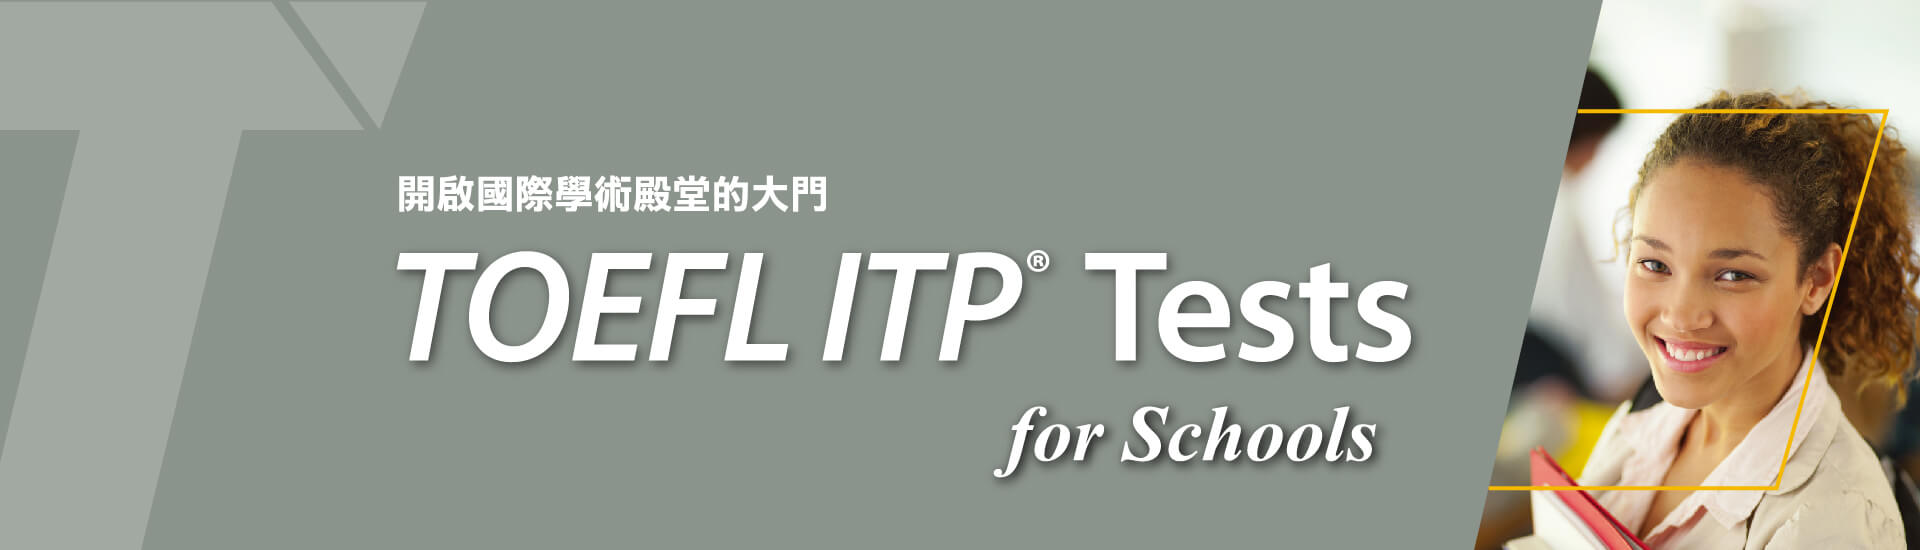 TOEFL ITP Tests